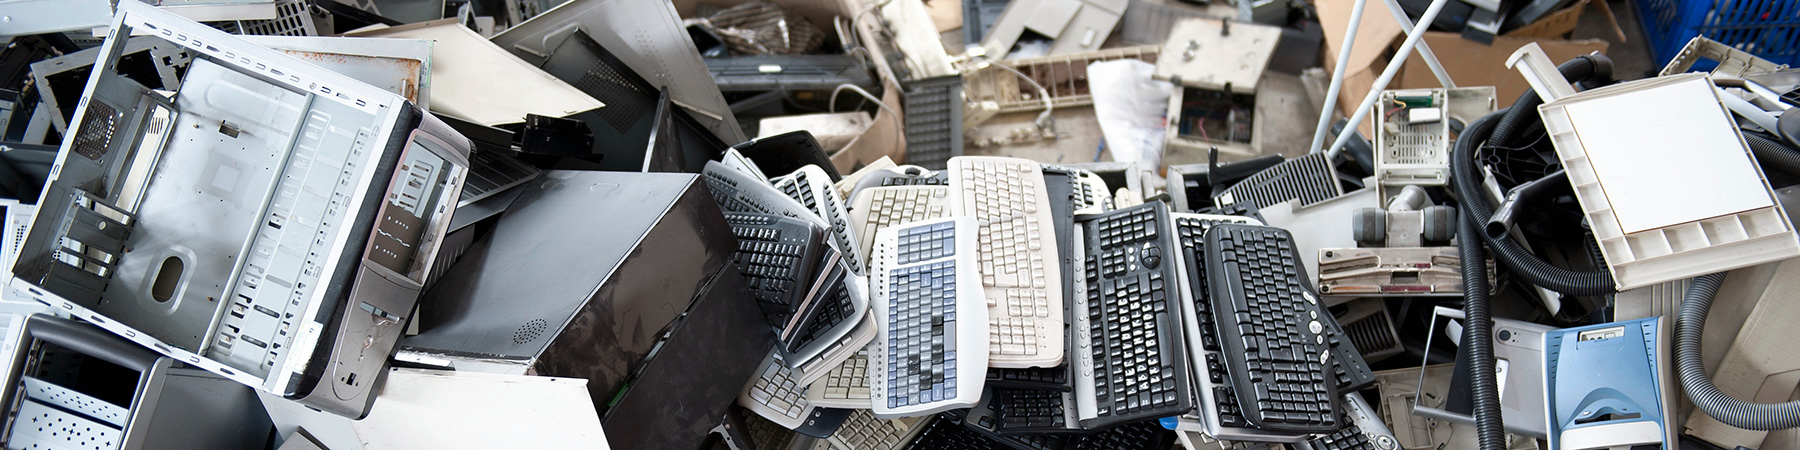 E-Waste Destruction & Recycling